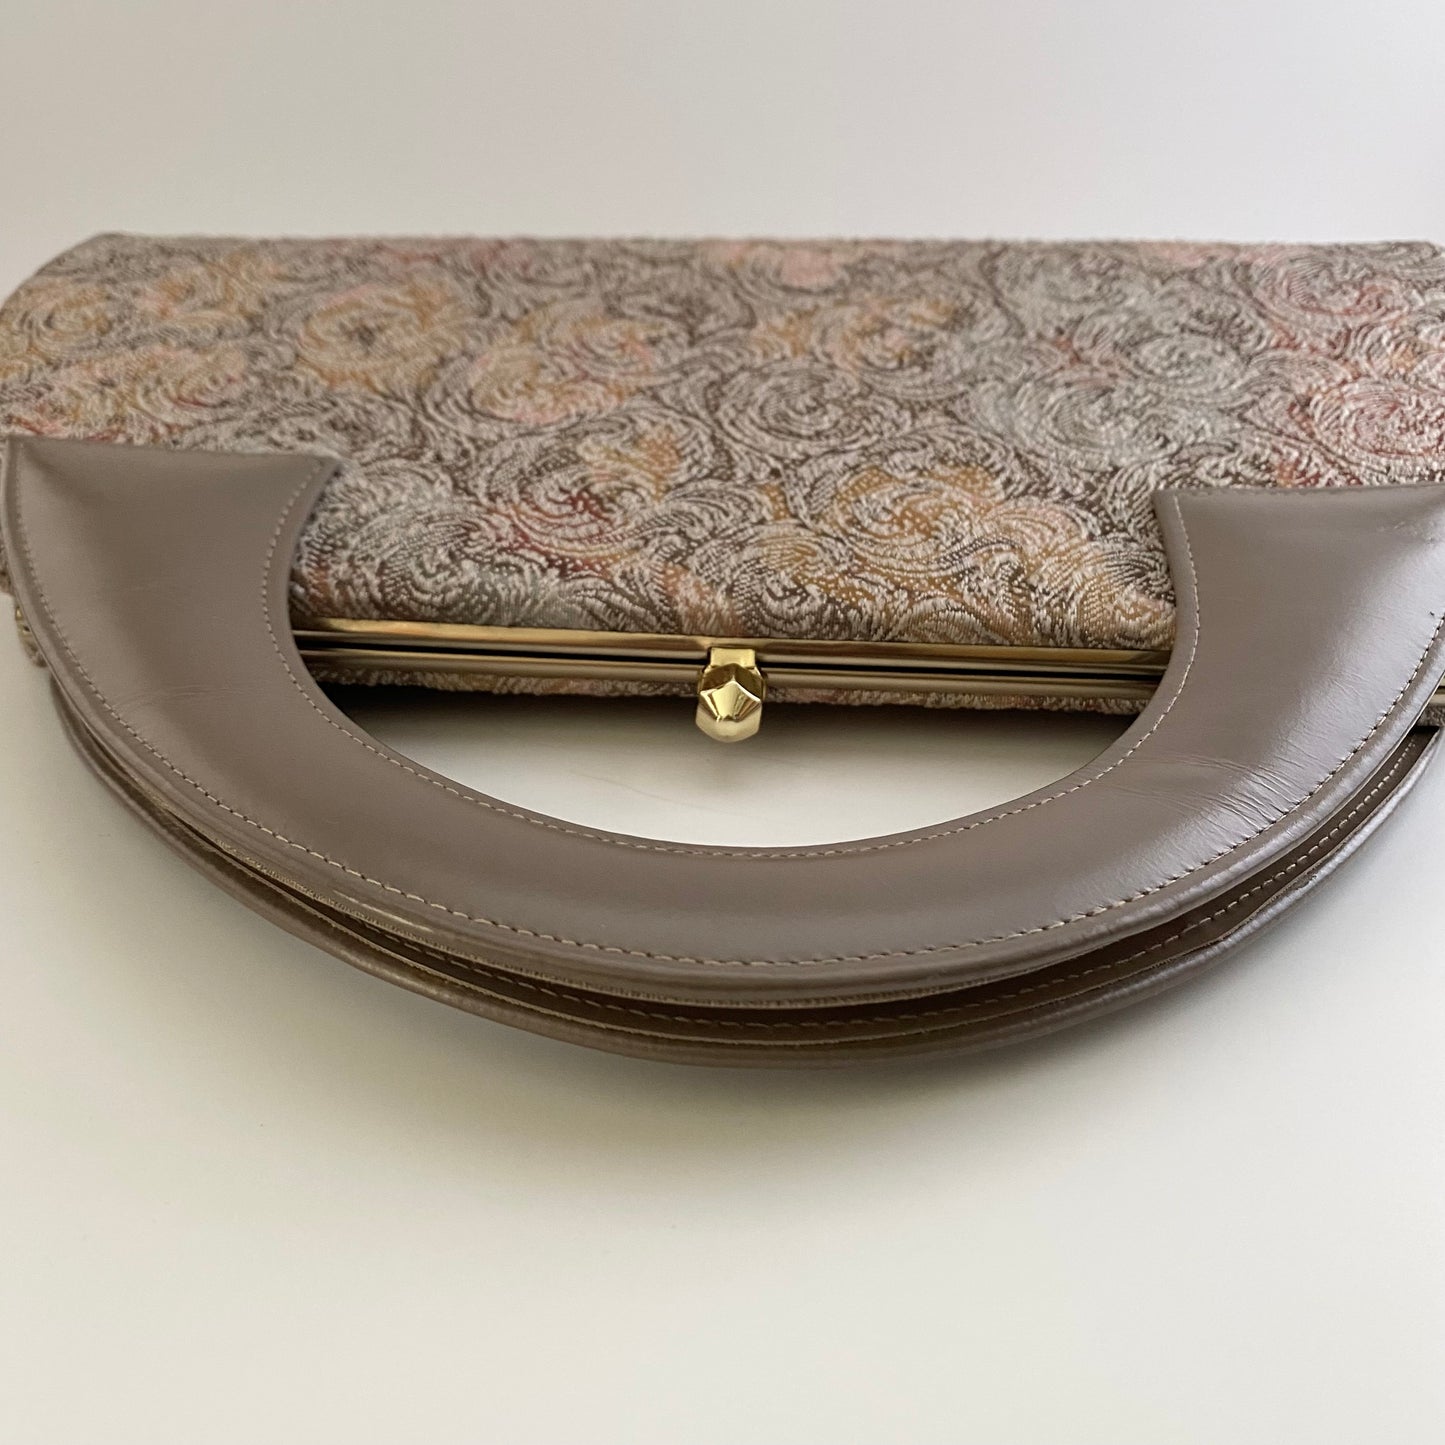 1960s Melbourne Tapestry Handbag